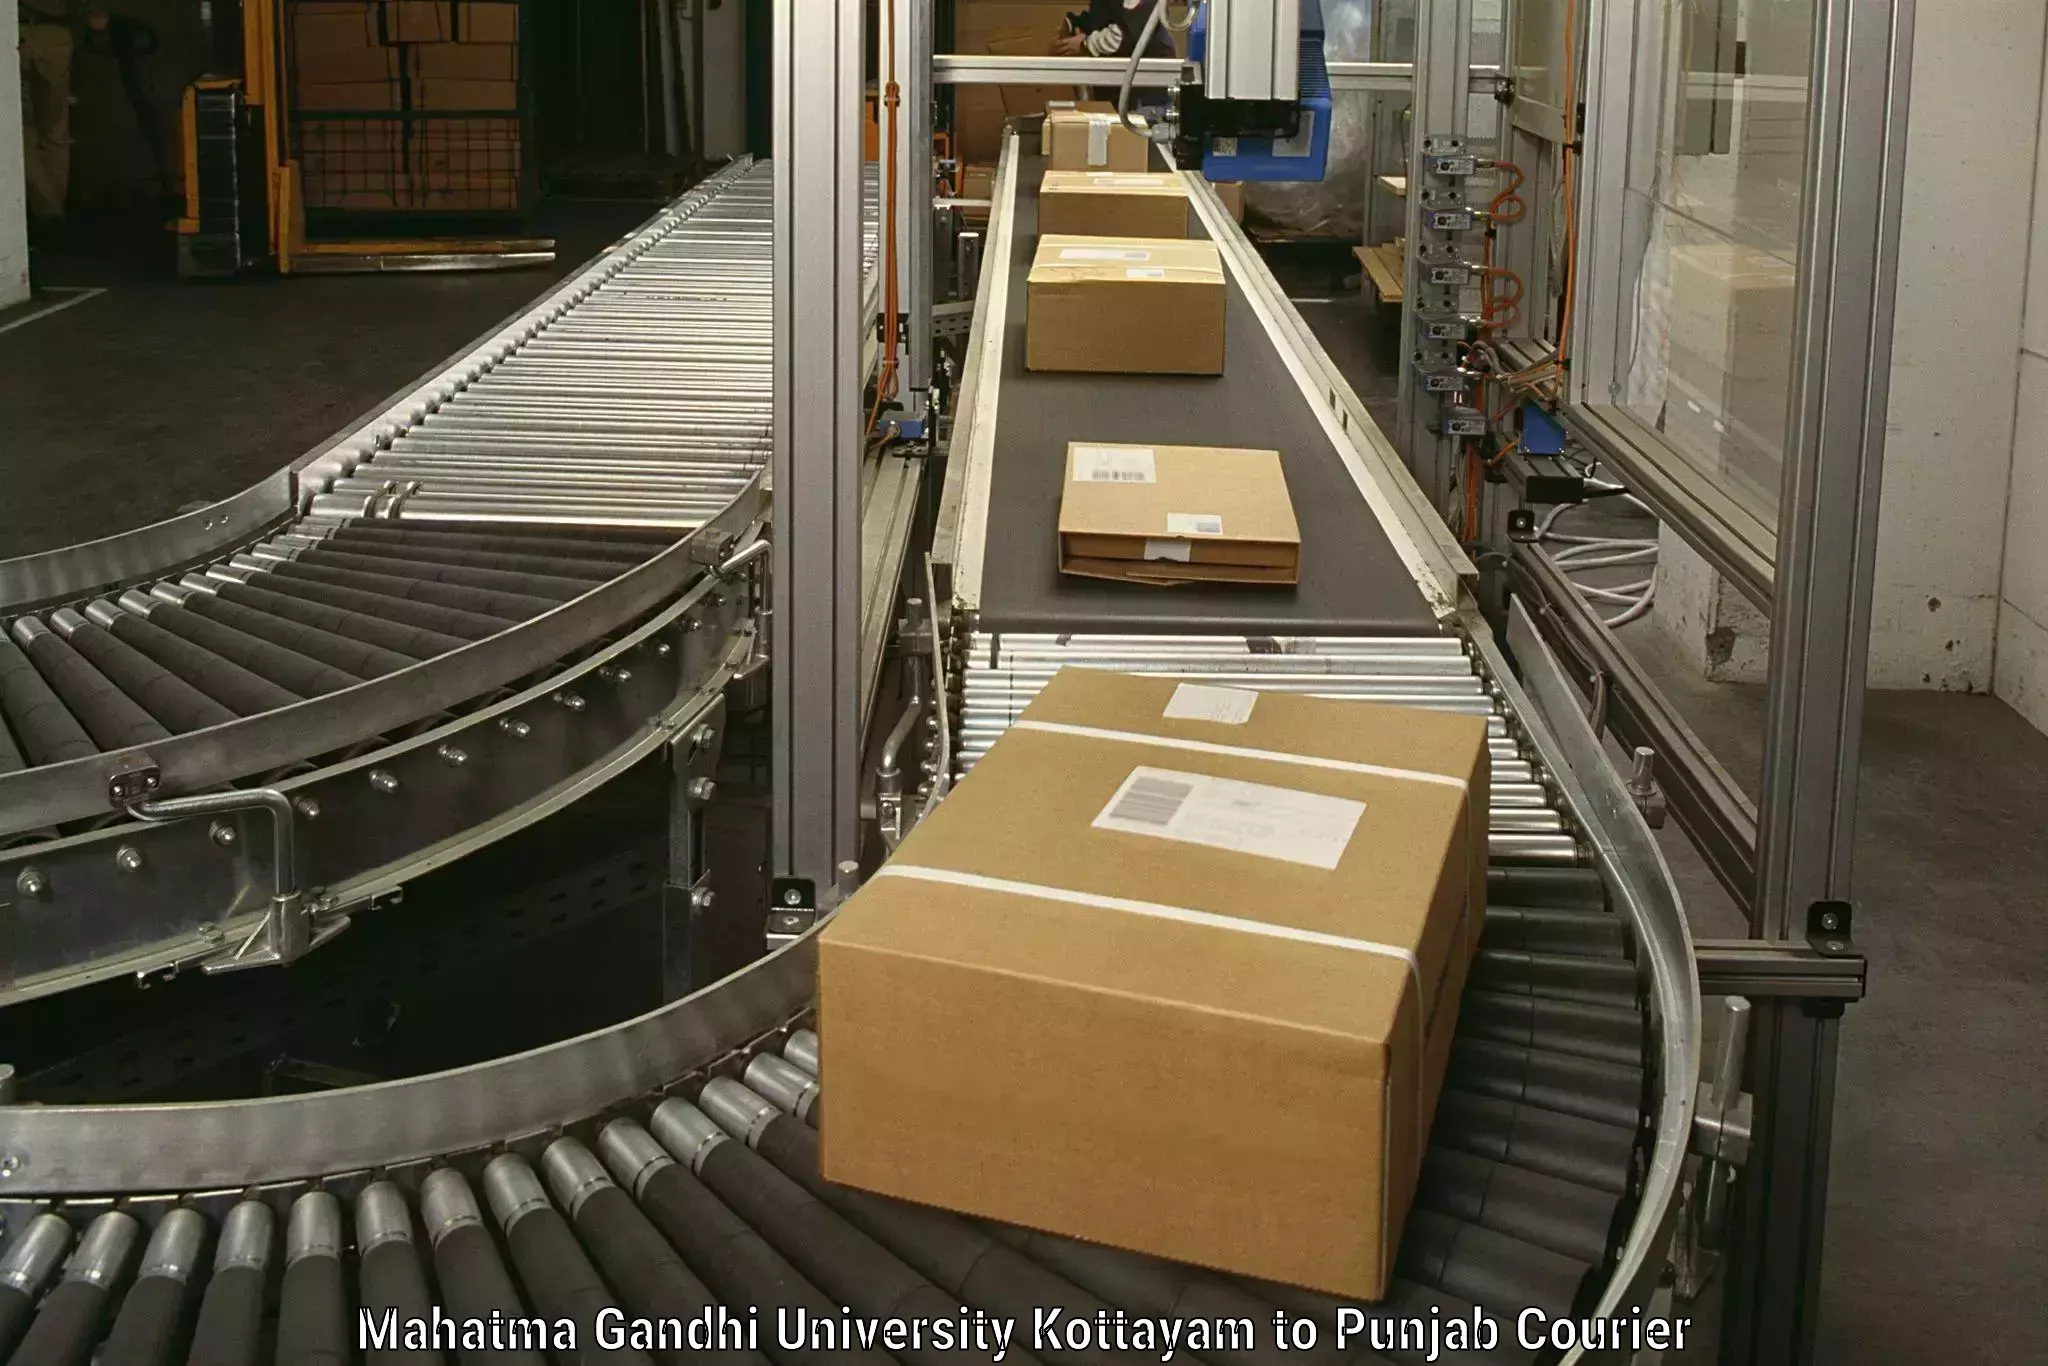 Home moving specialists Mahatma Gandhi University Kottayam to Punjab